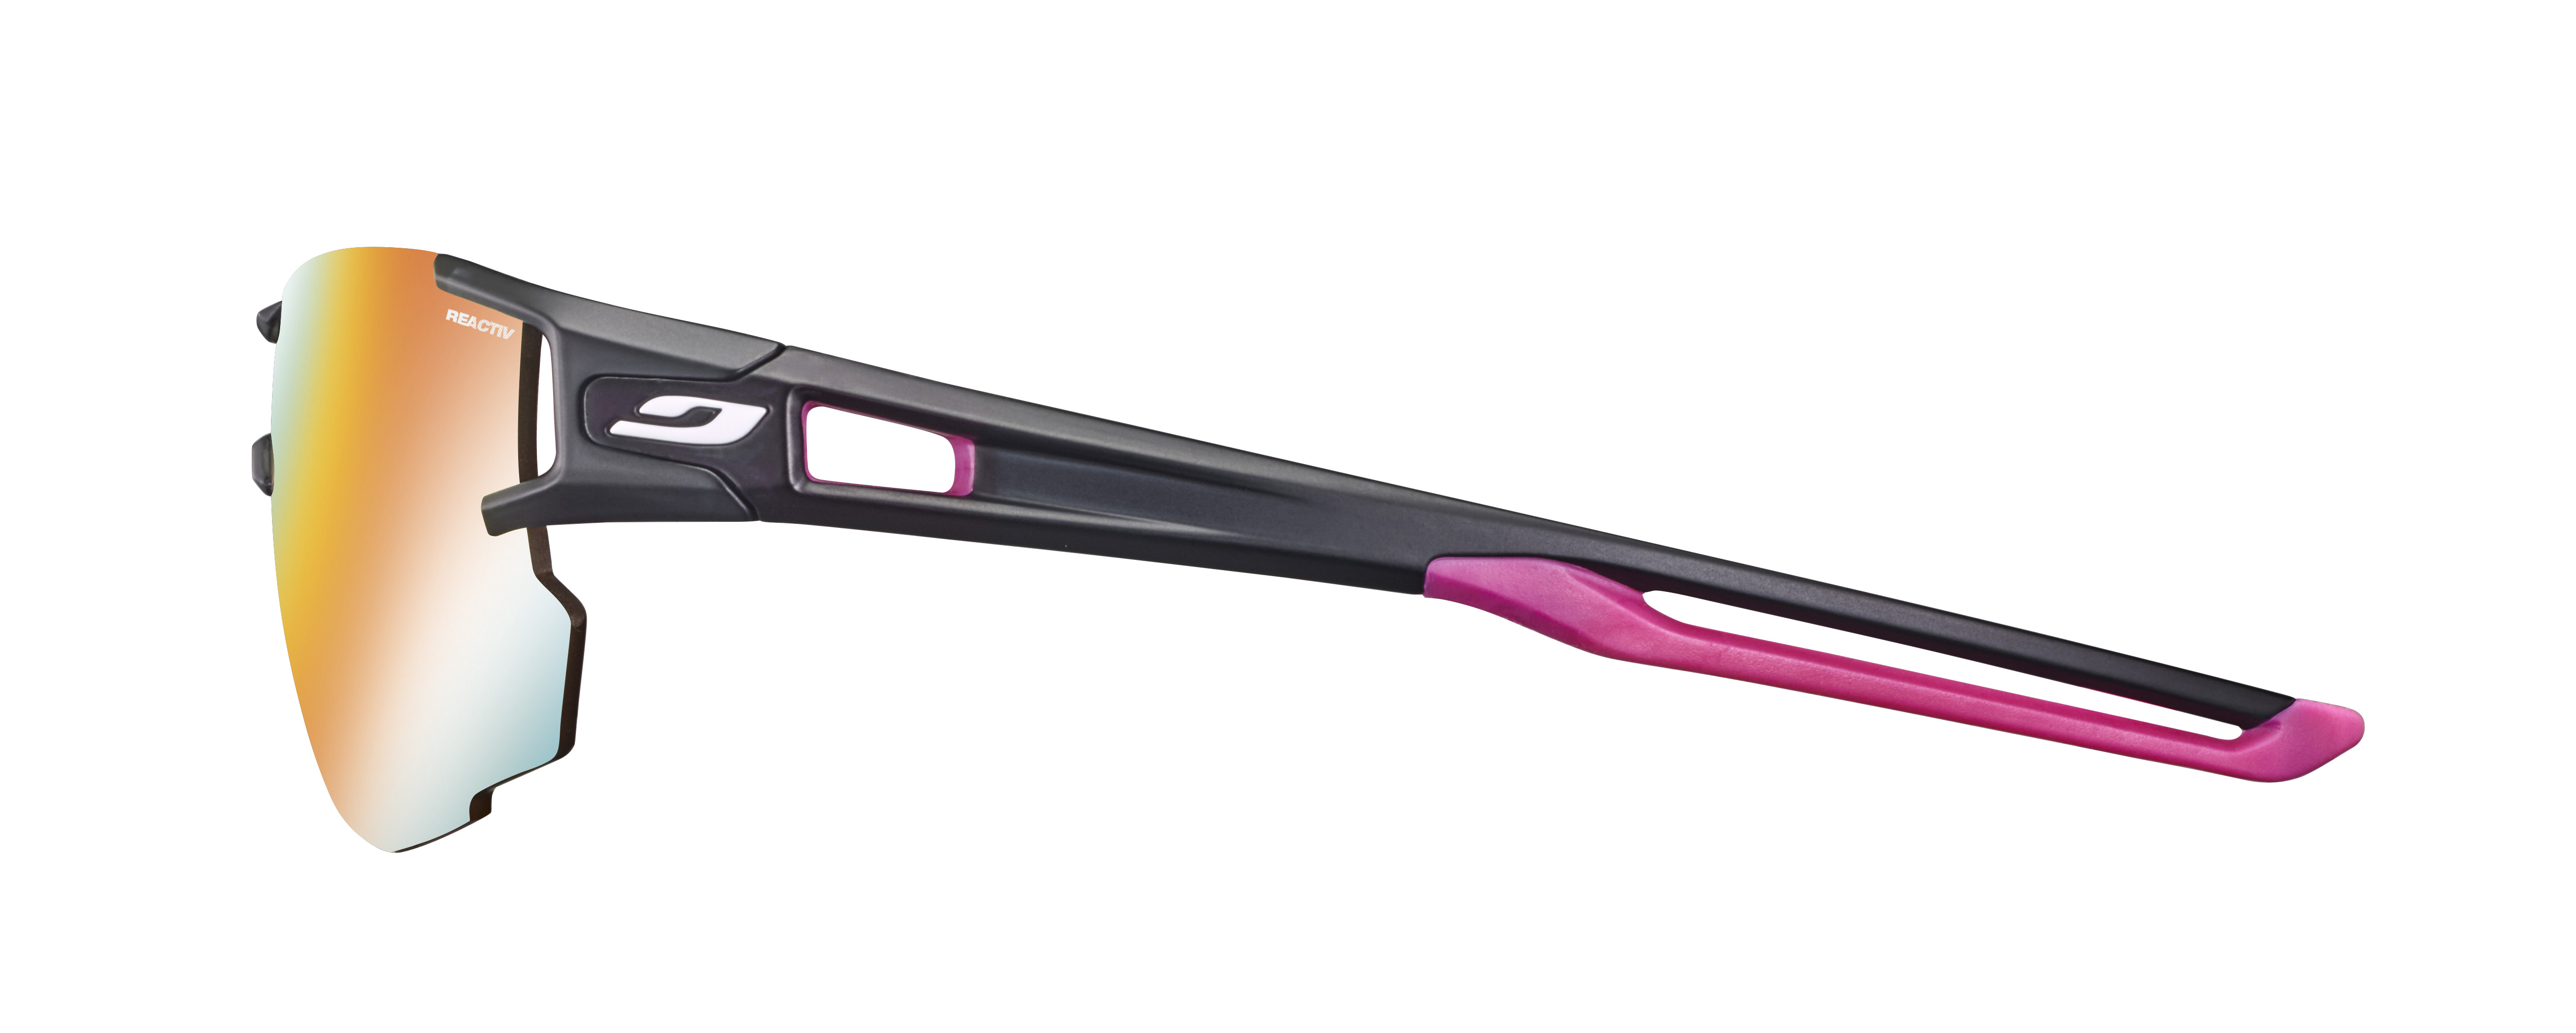 Sunglasses Julbo Js496 aerolite, pink colour - Doyle